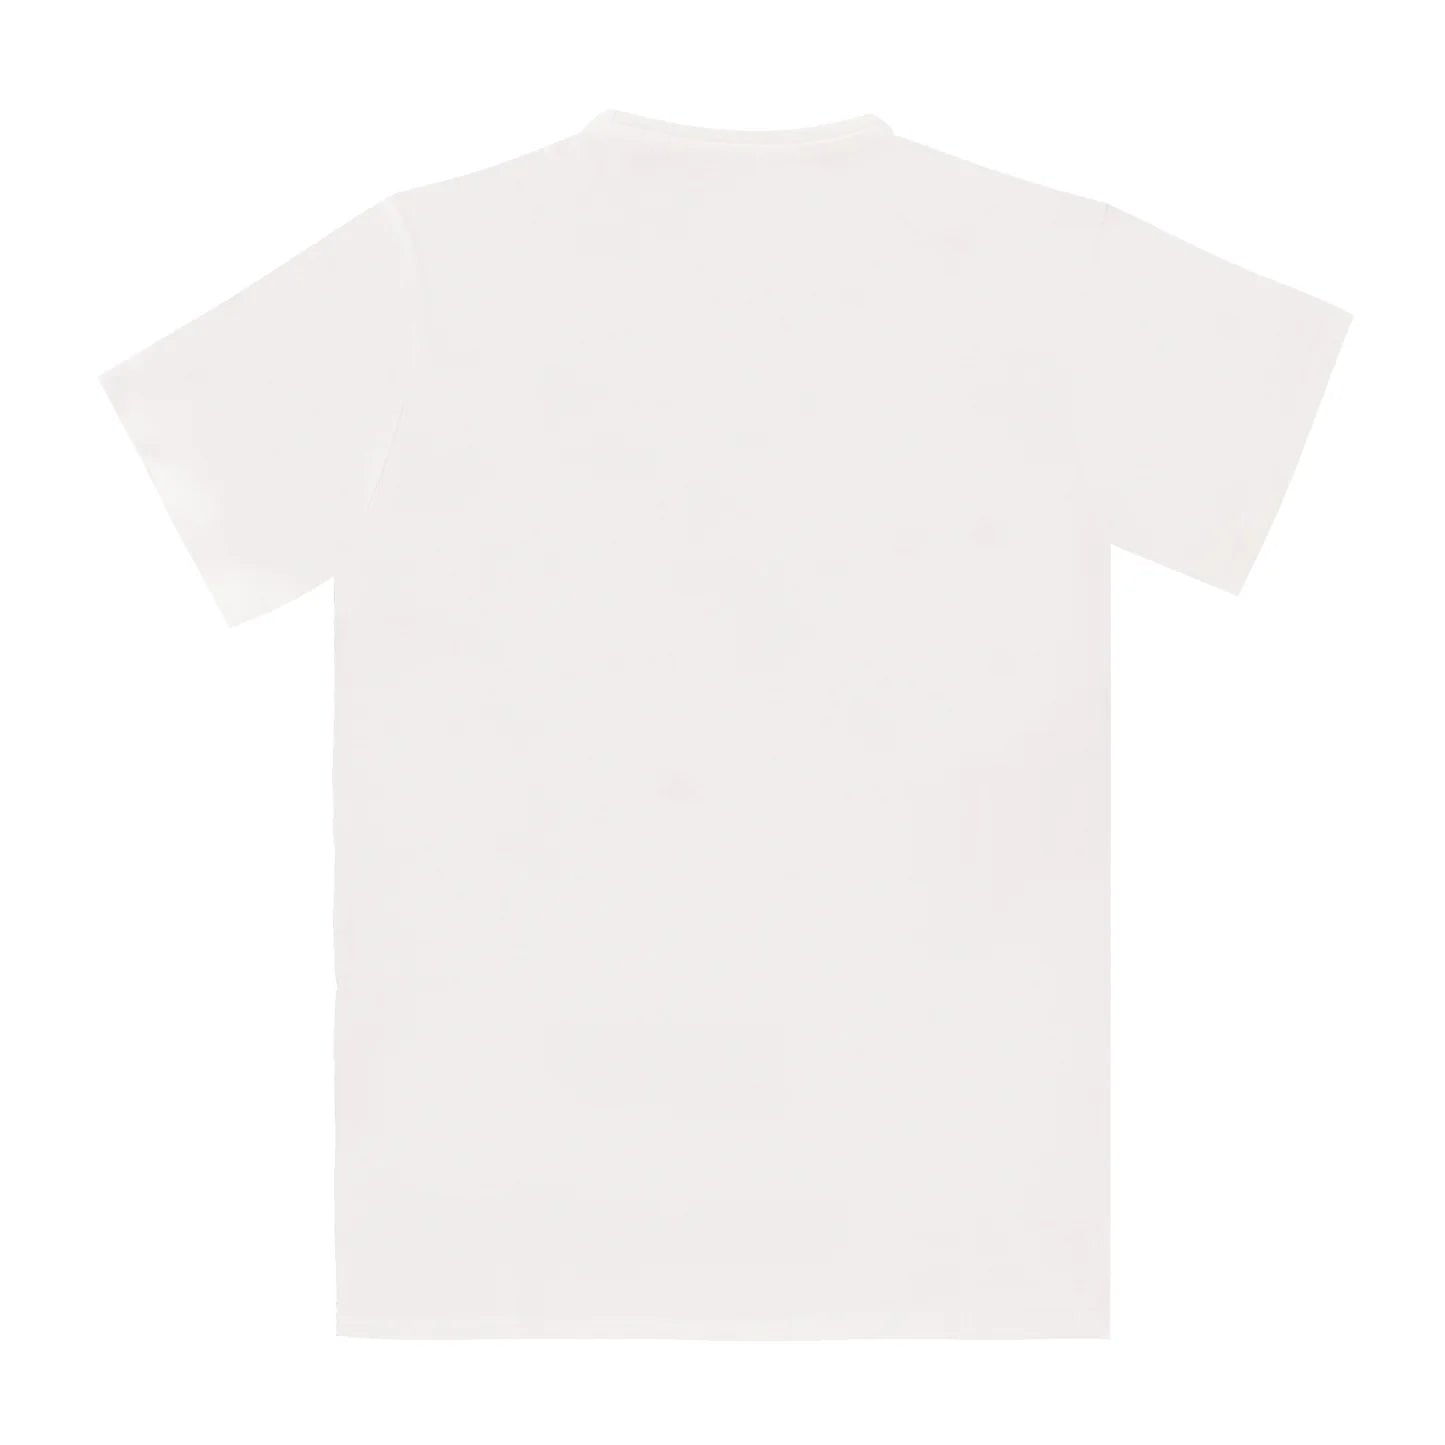 White T-shirts for men